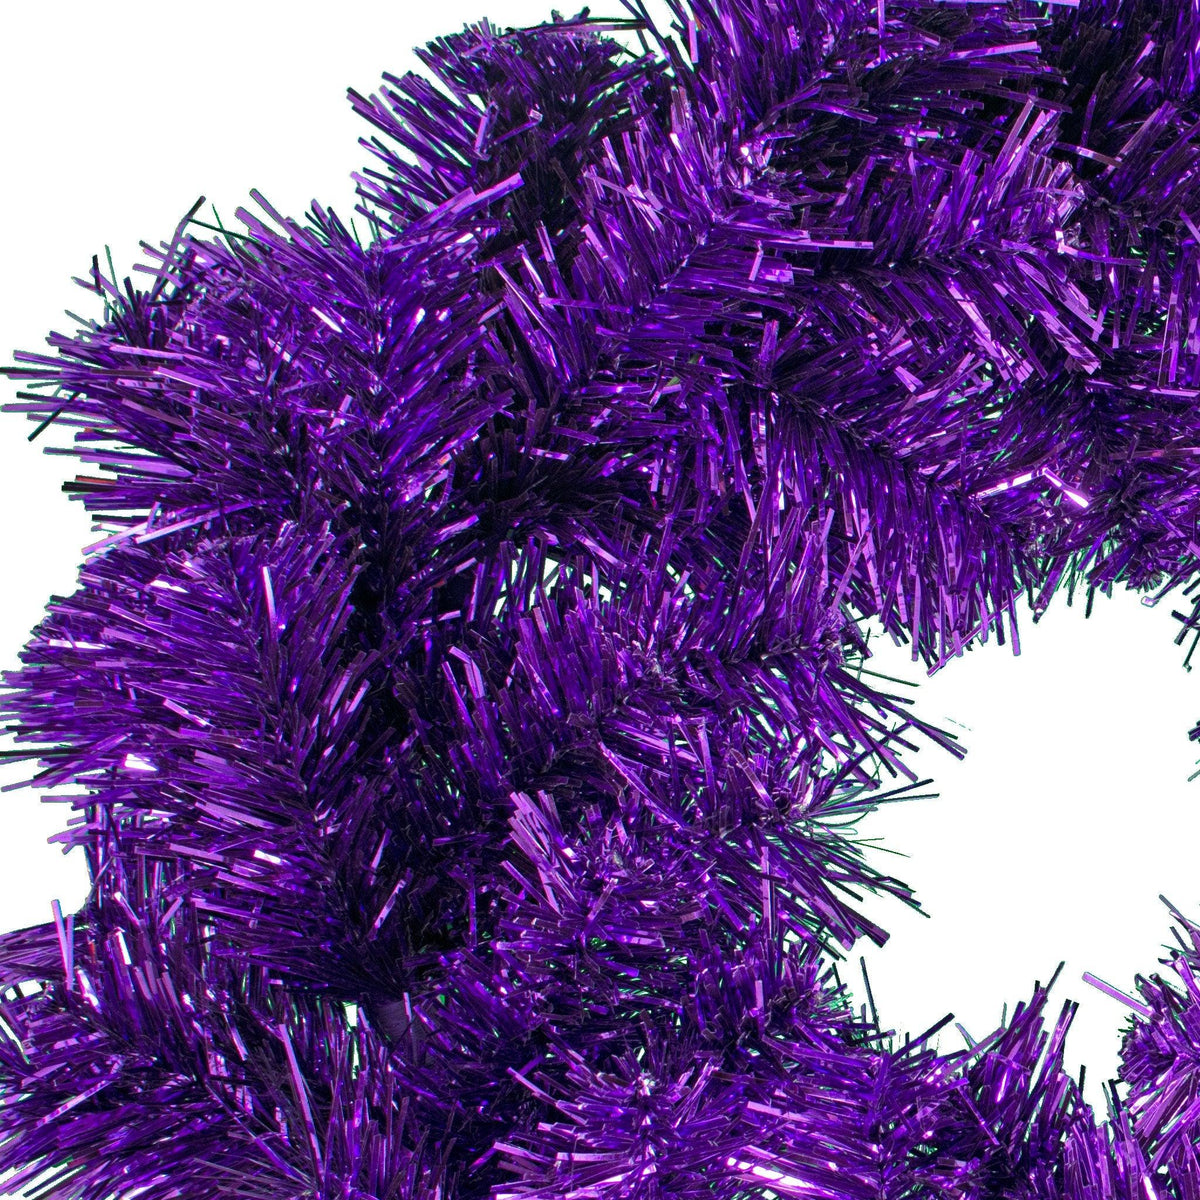 Metallic Purple tinsel brush made with Lee Display's 18in wreaths.